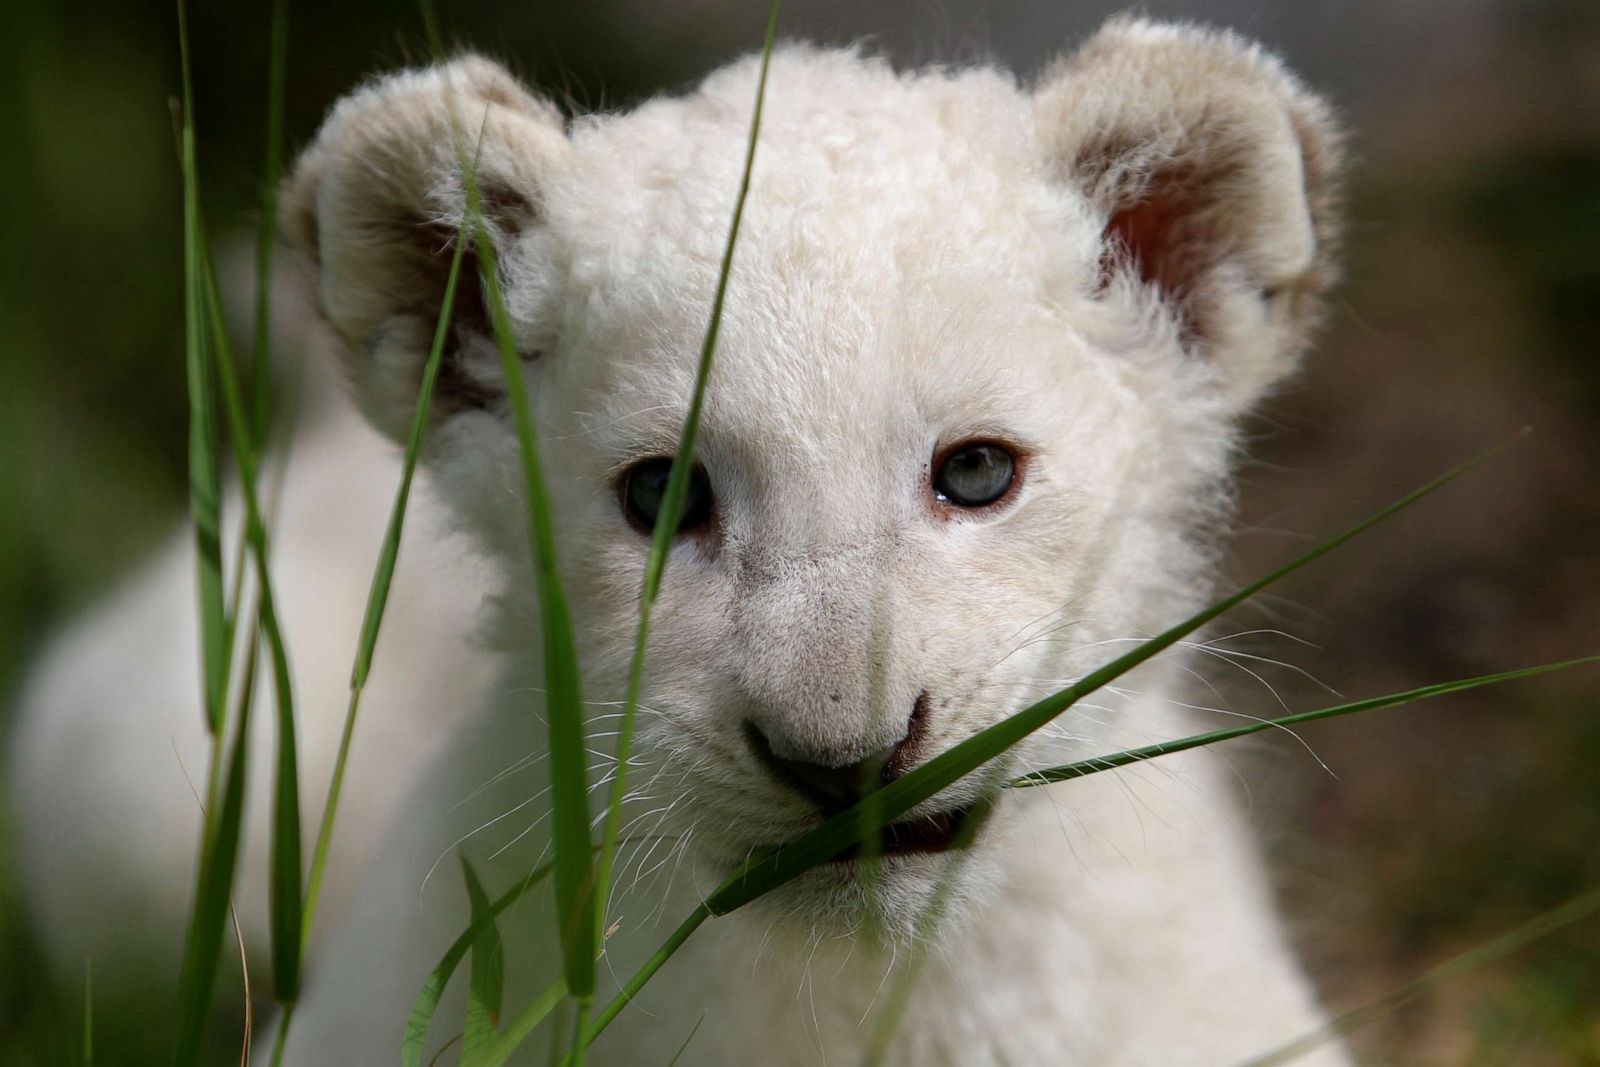 Cutest baby animals from around the world Photos - ABC News